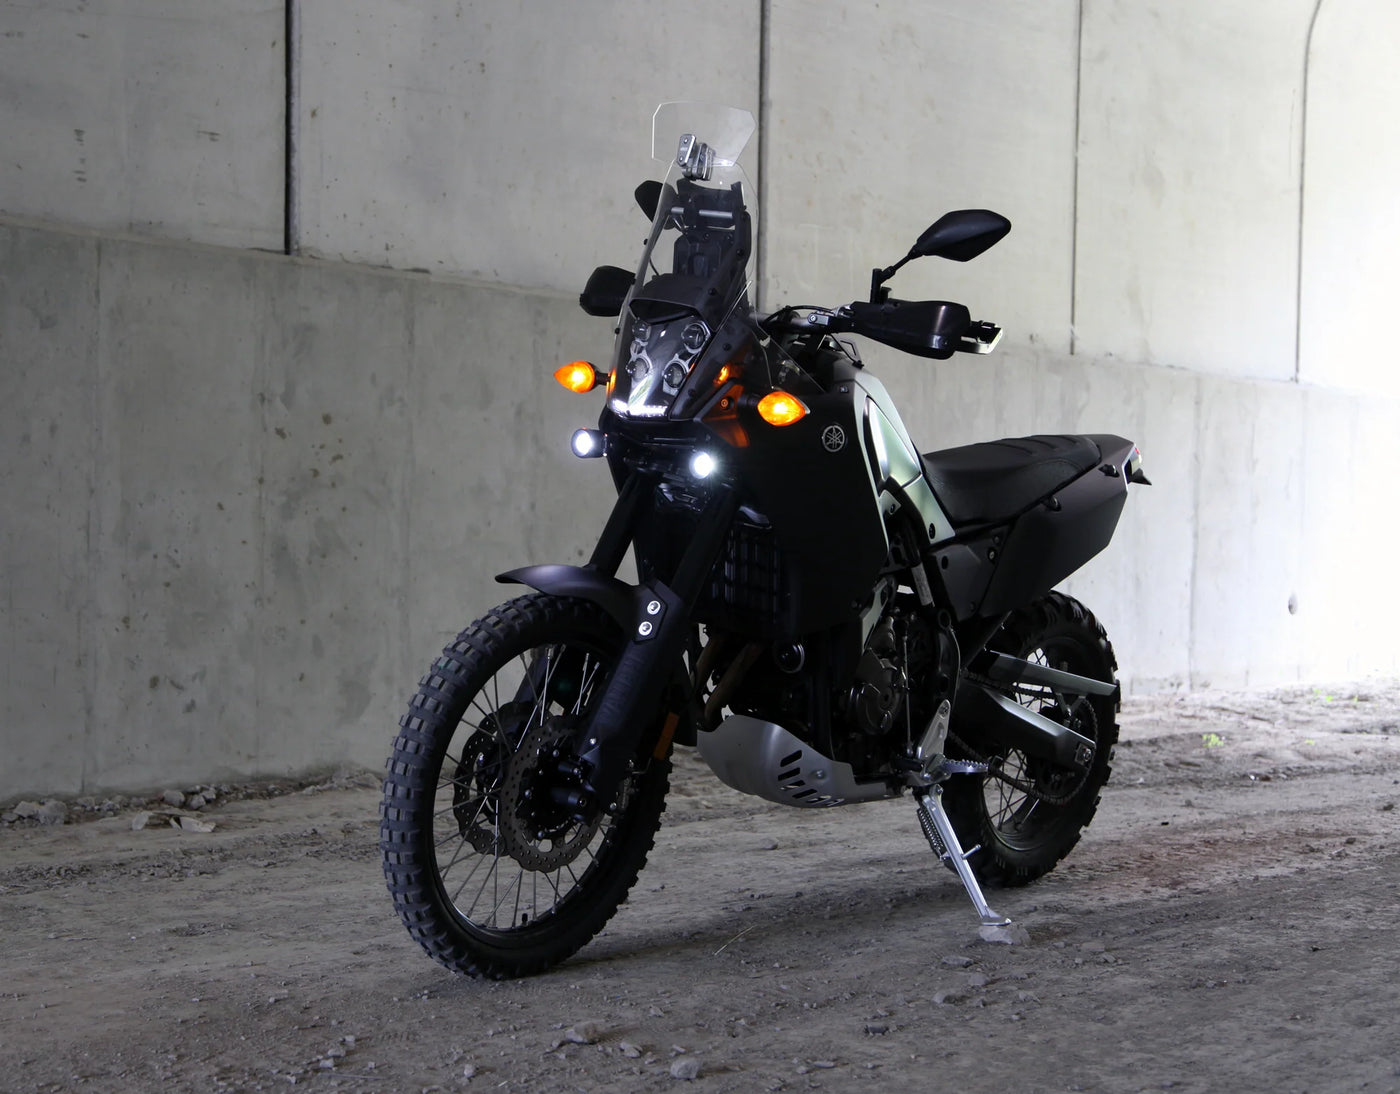 Denali Driving Light Mount - Yamaha Tenere 700 '21-'21 [LAH.06.10200]